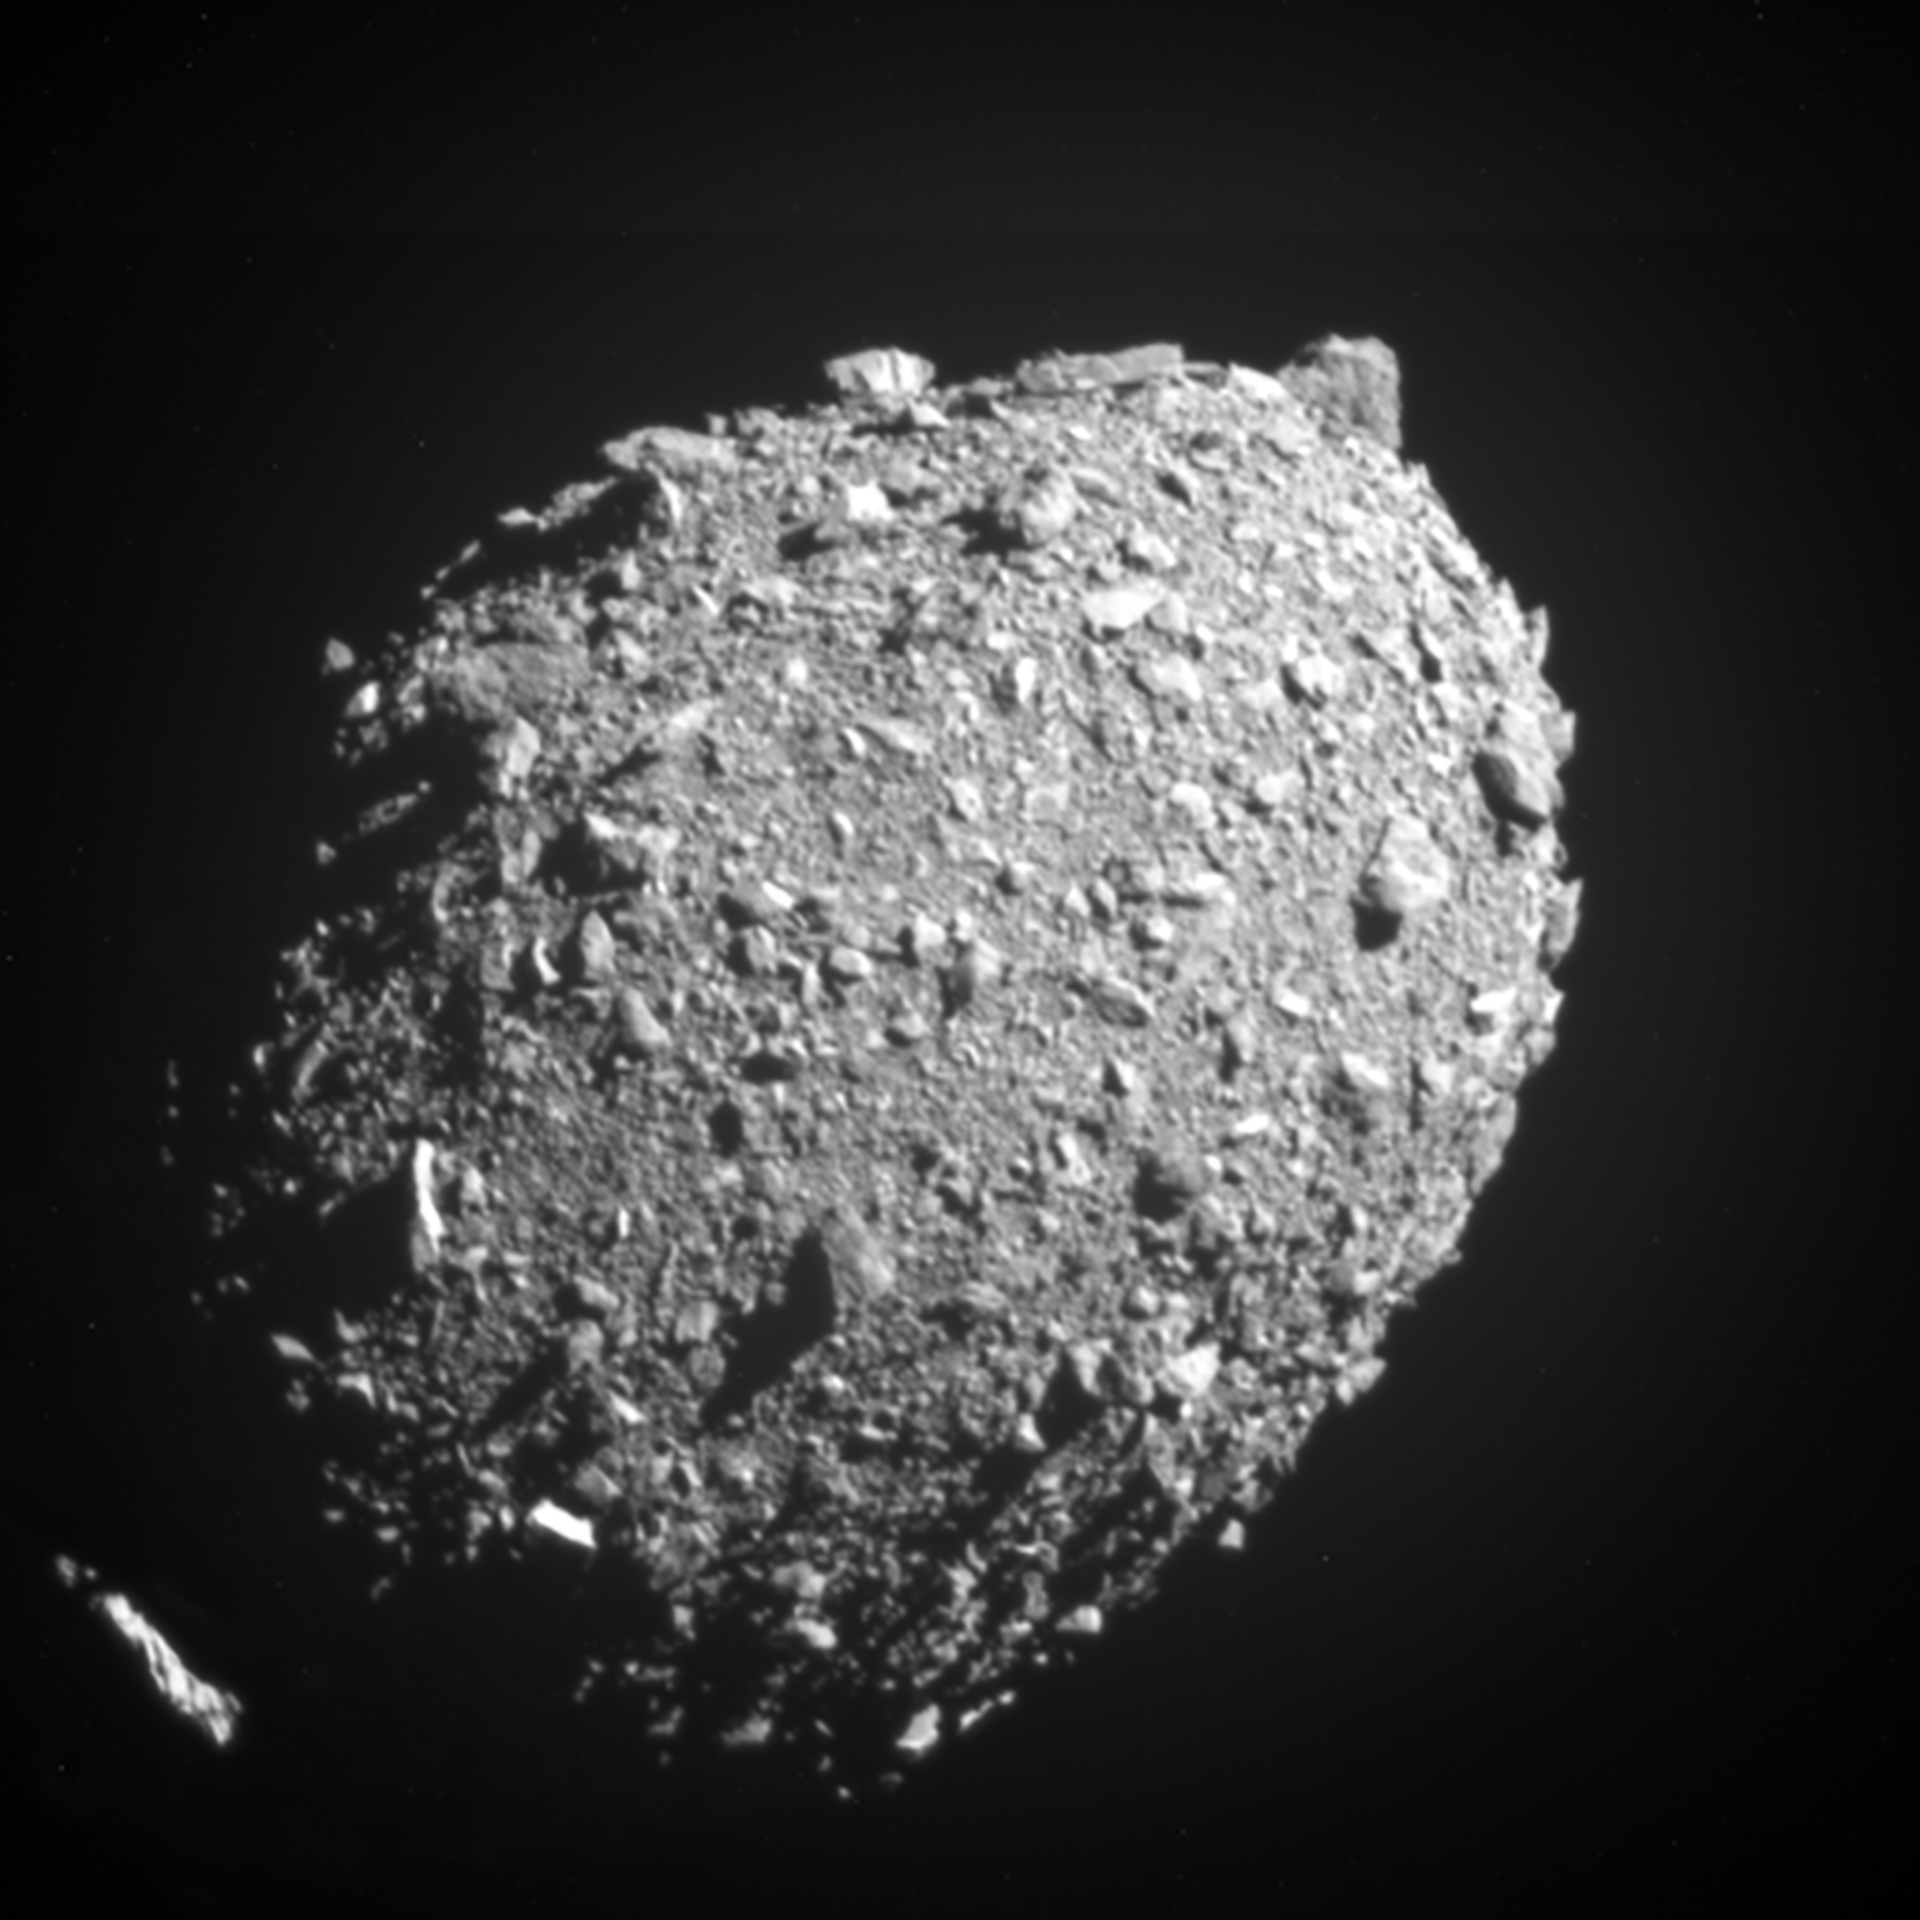 Dimorphos asteroid seen by DART